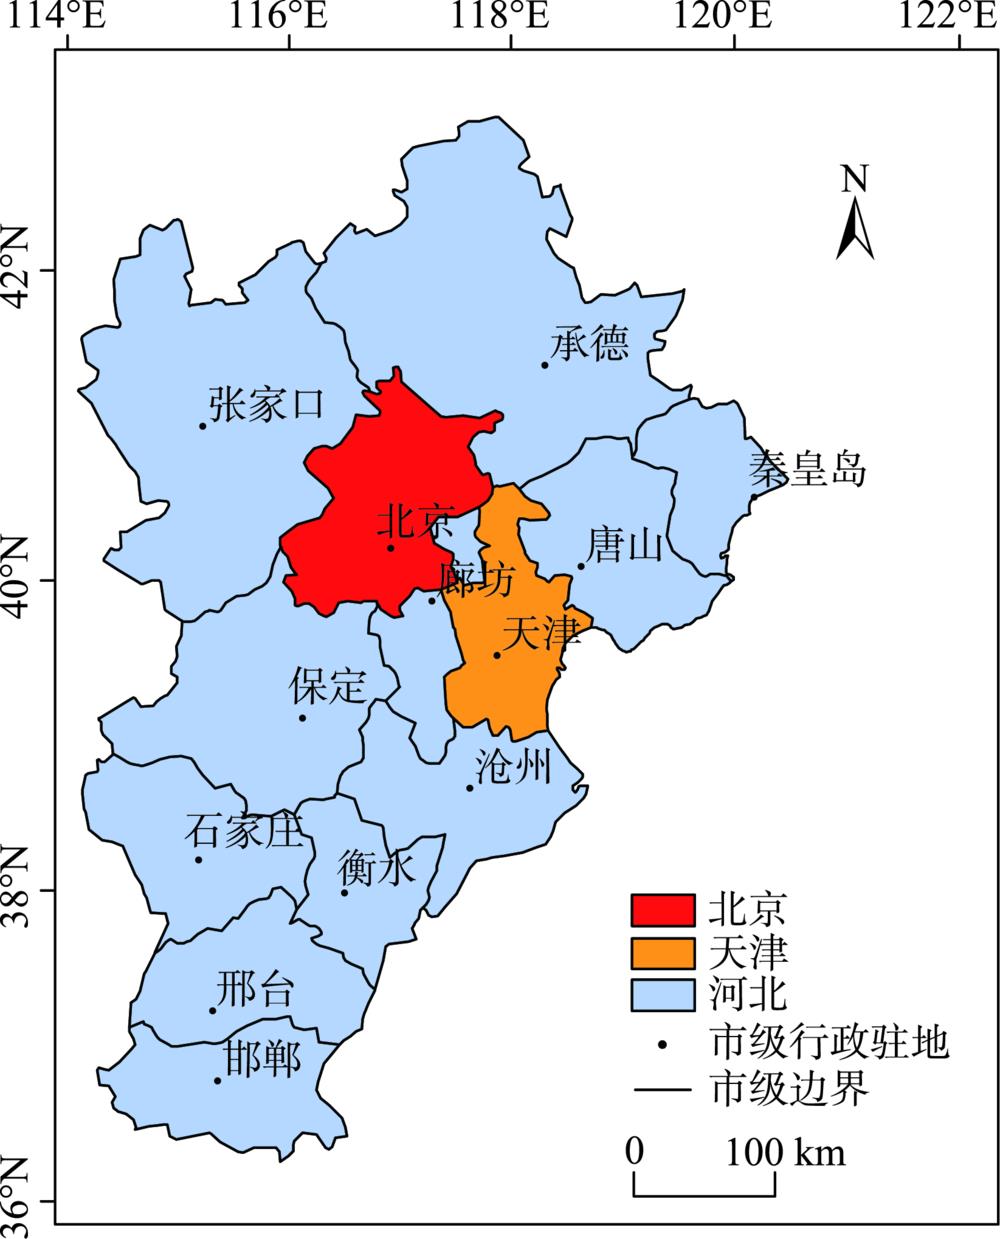 Map of study area of Beijing, Tianjin and Hebei